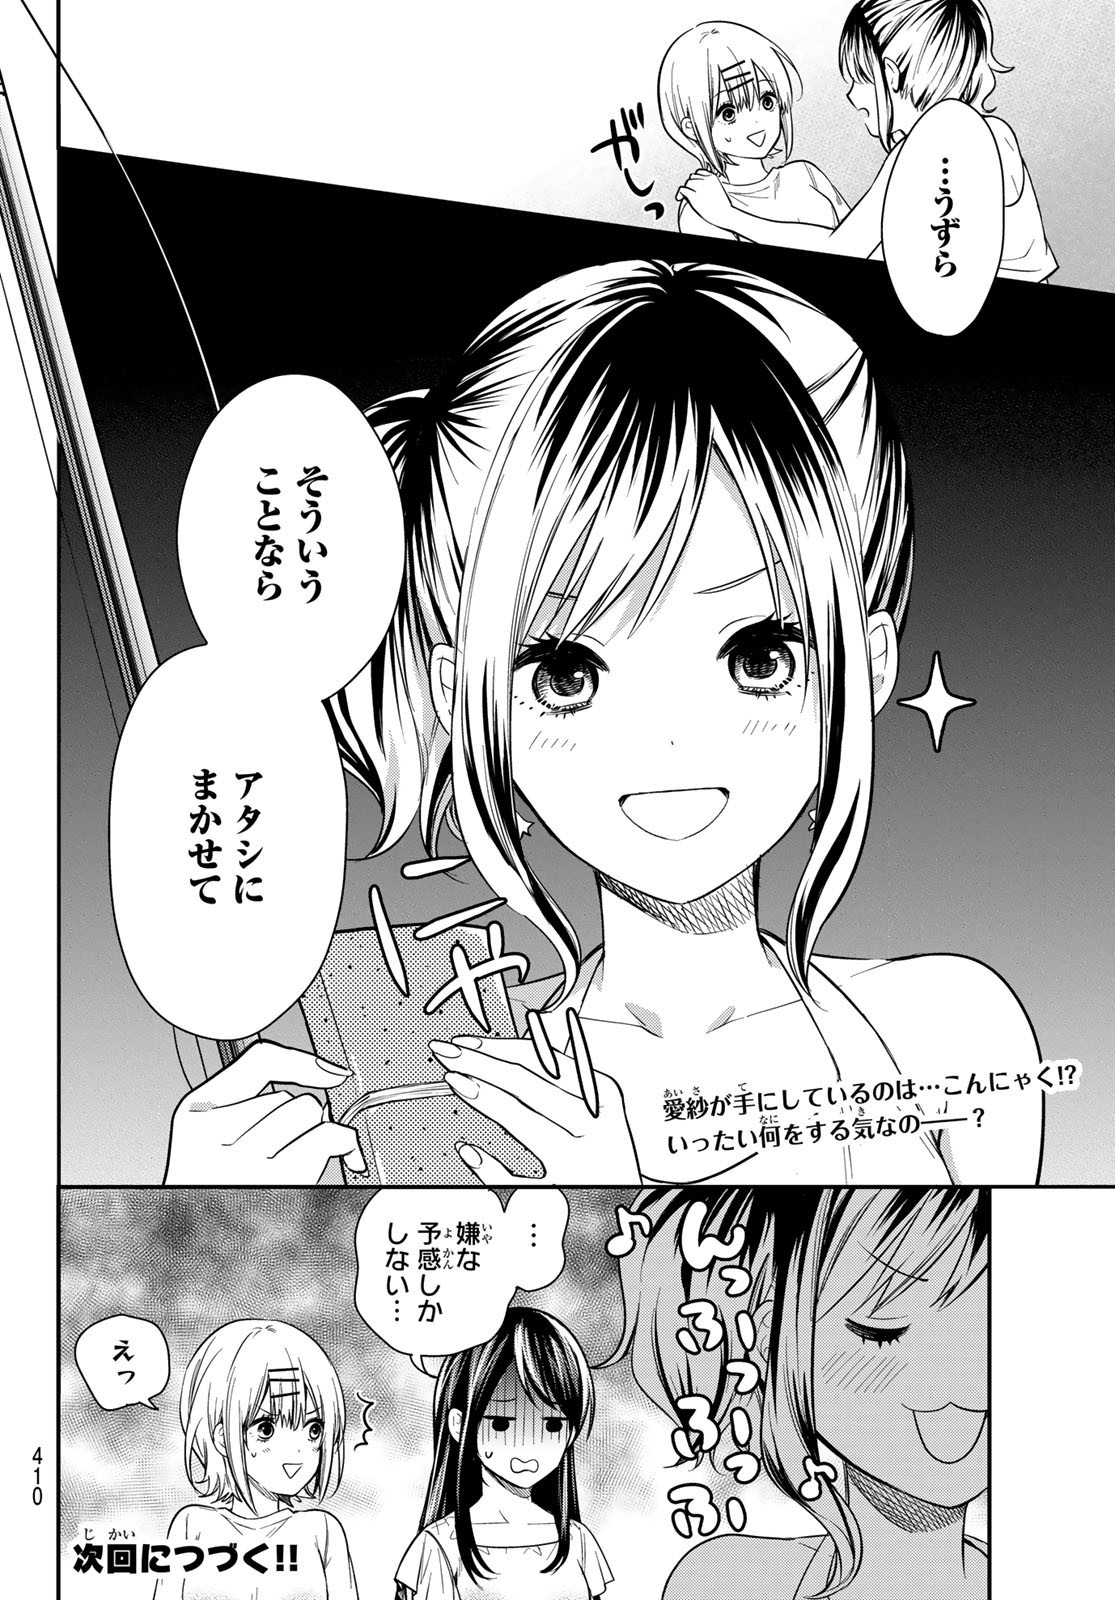 Kimi ga Megami Nara Ii no ni (I Wish You Were My Muse) - Chapter 020 - Page 20